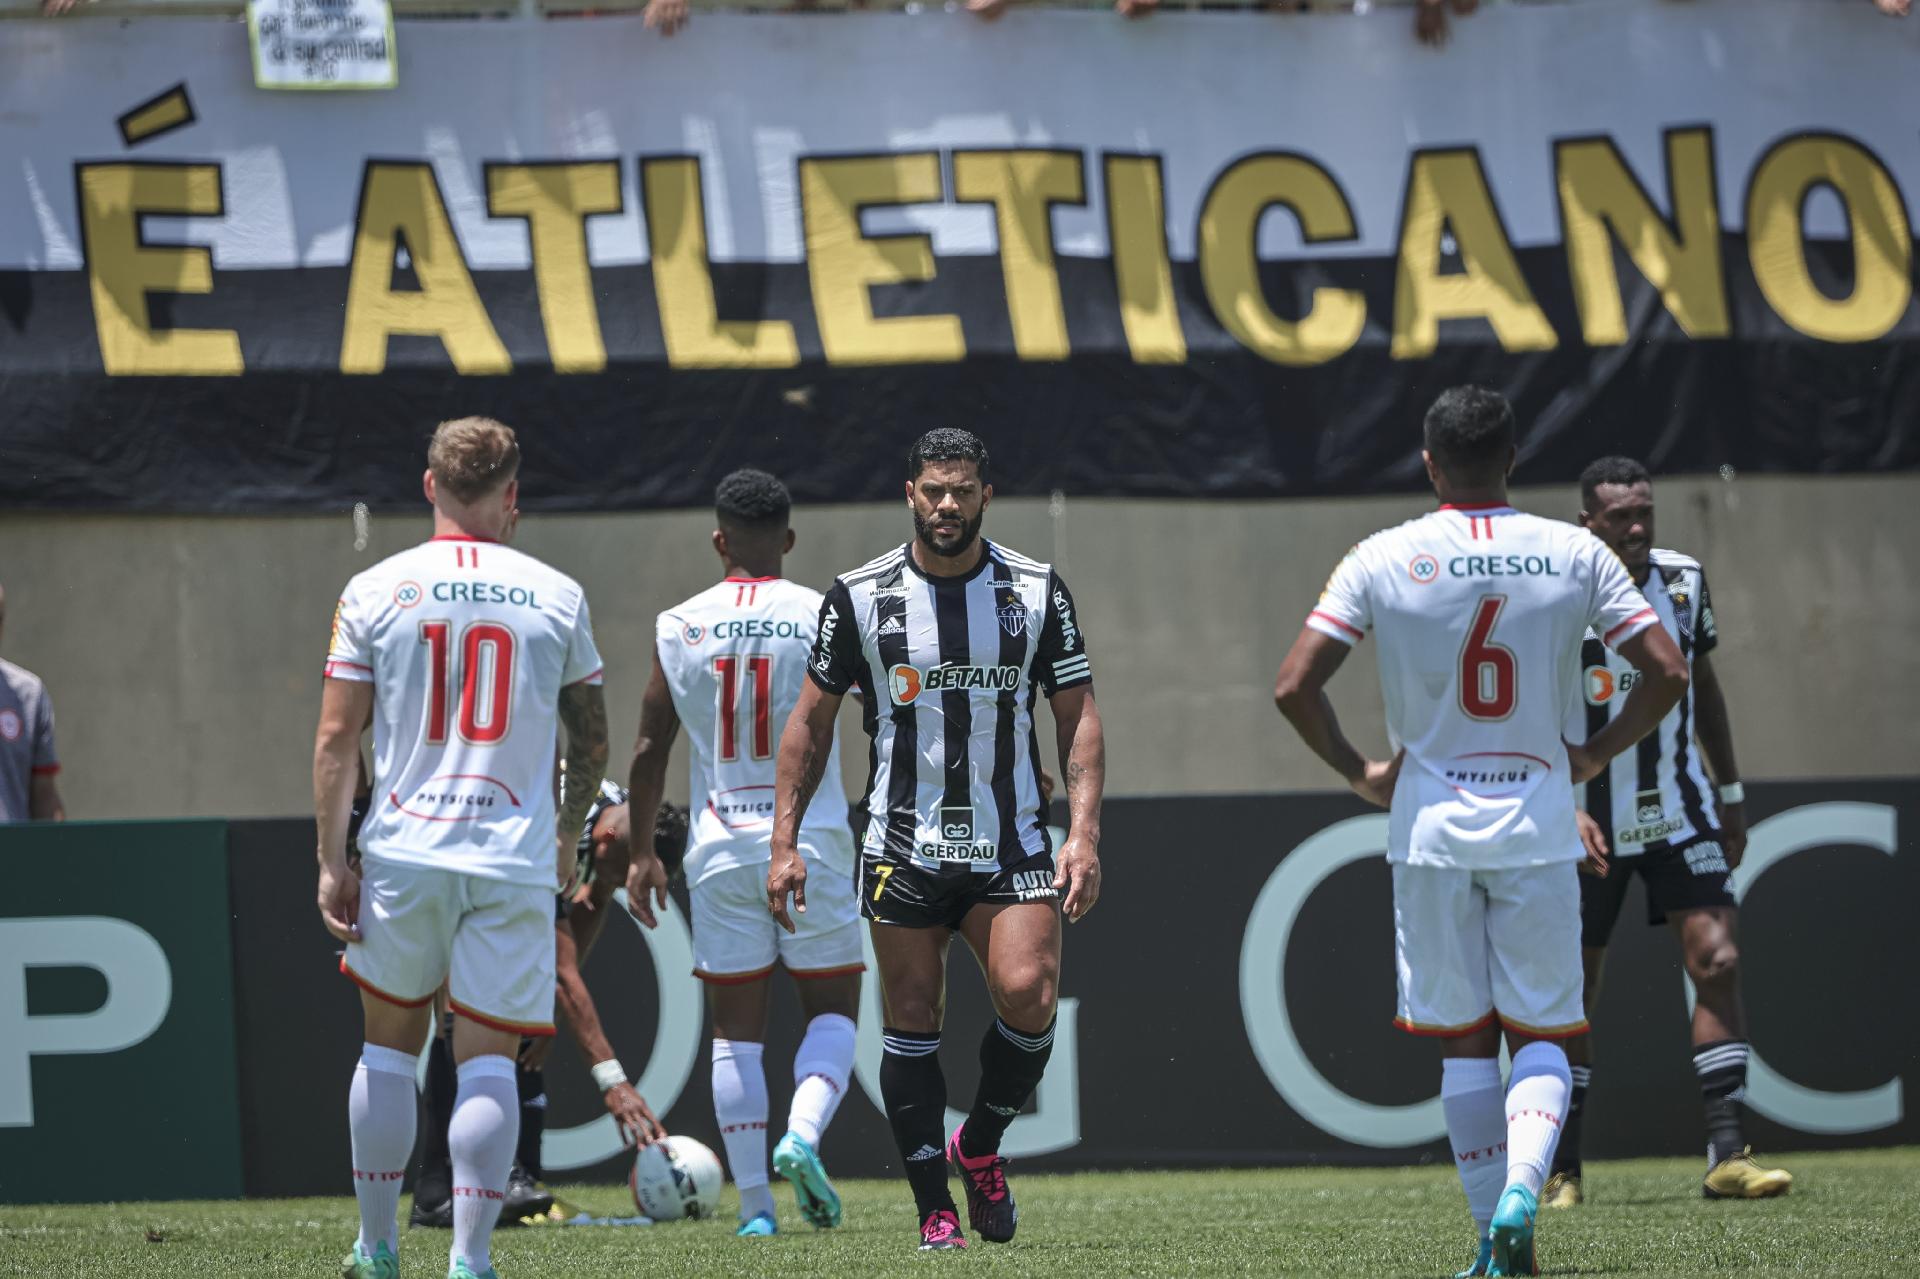 Tombense vs Grêmio: An Exciting Clash of Soccer Giants